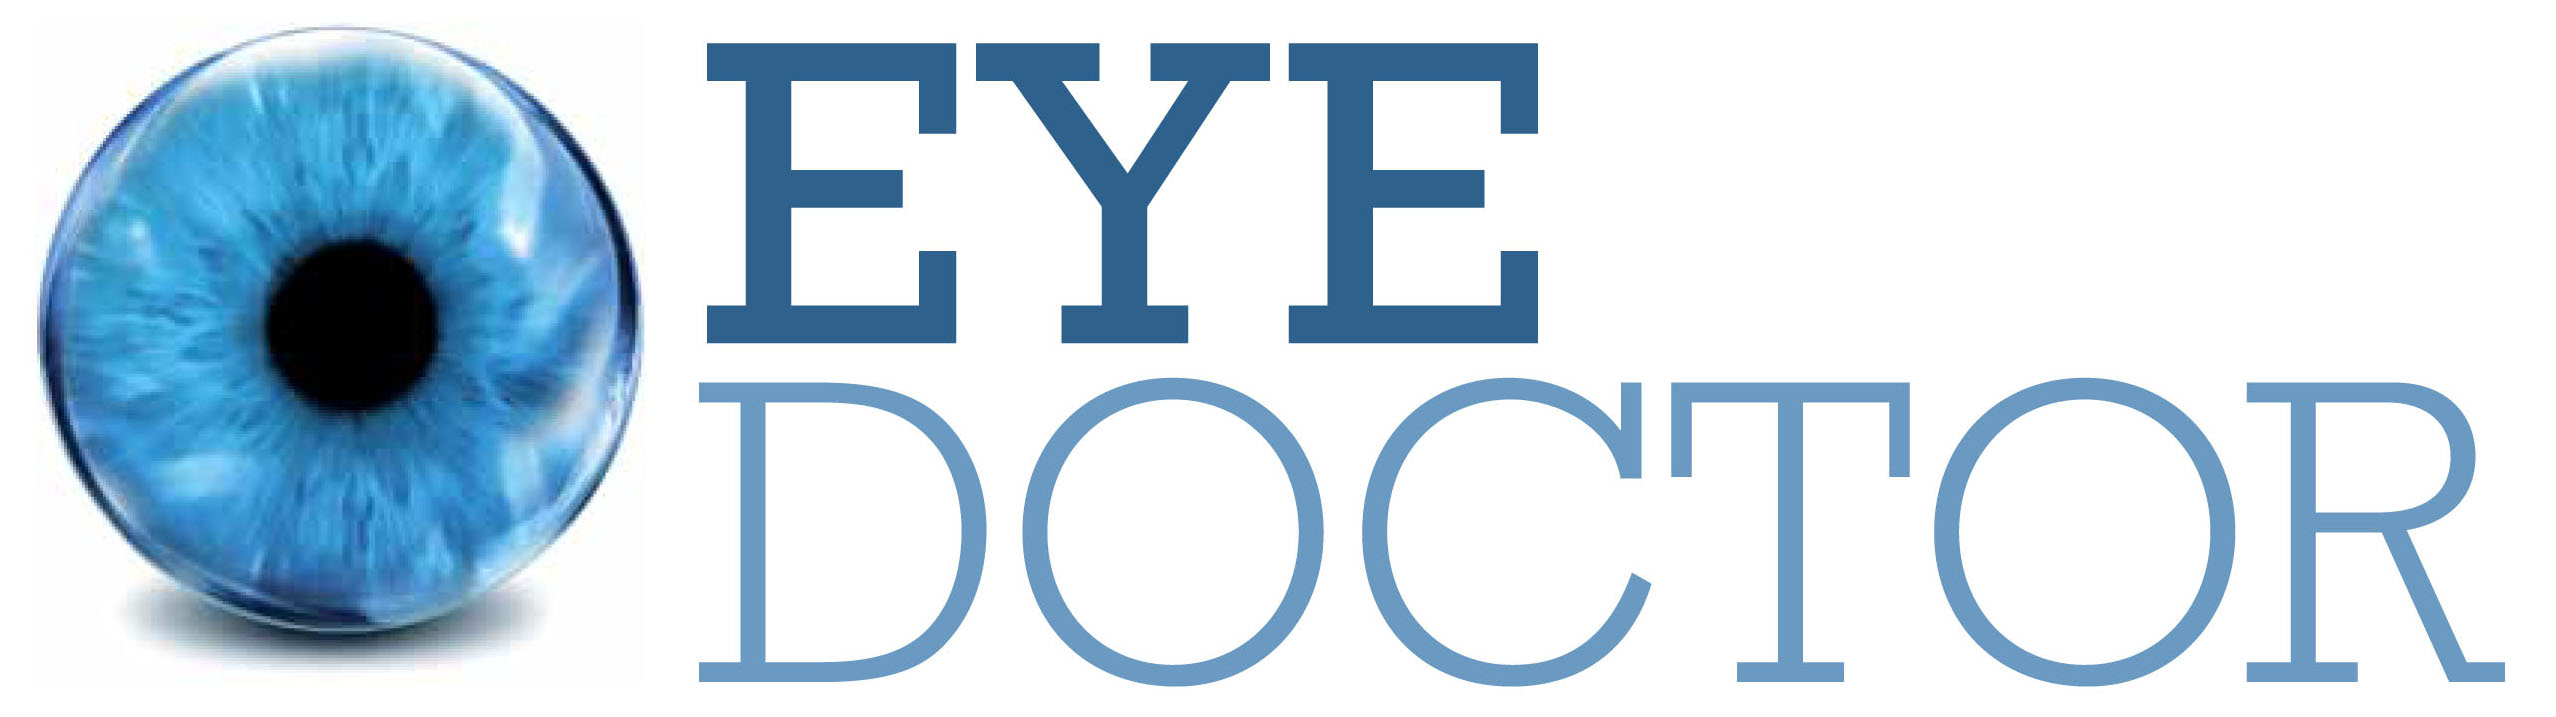 eyes doctor Logo photo - 1